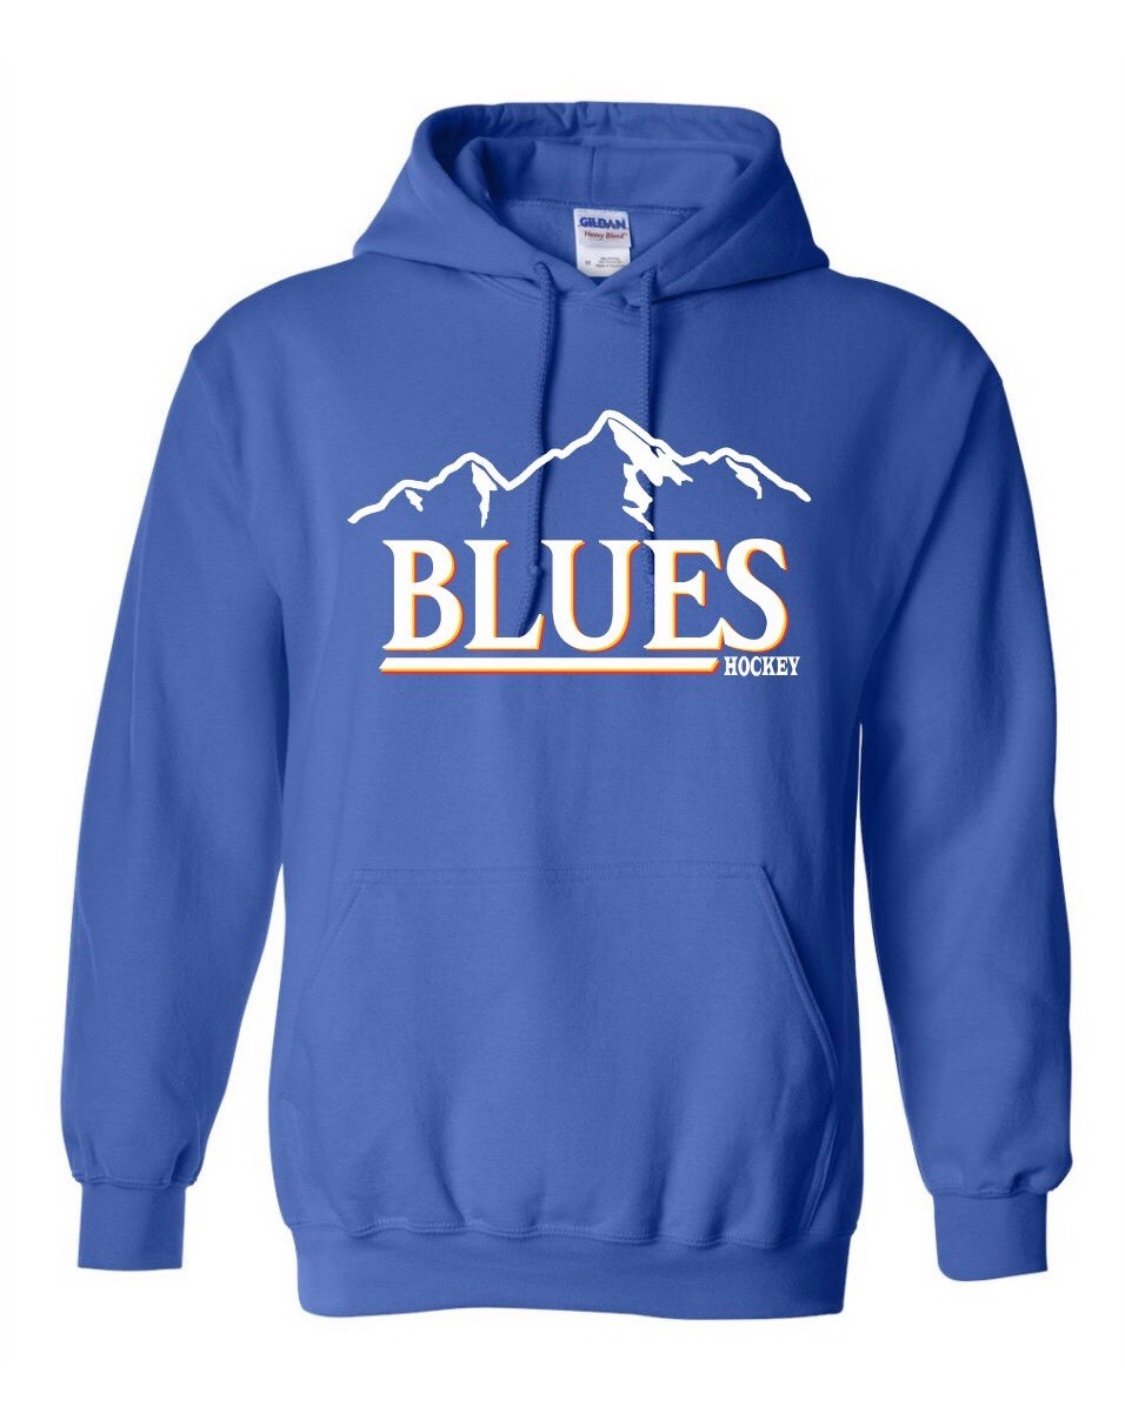 Shop Blues Hockey Hoodies